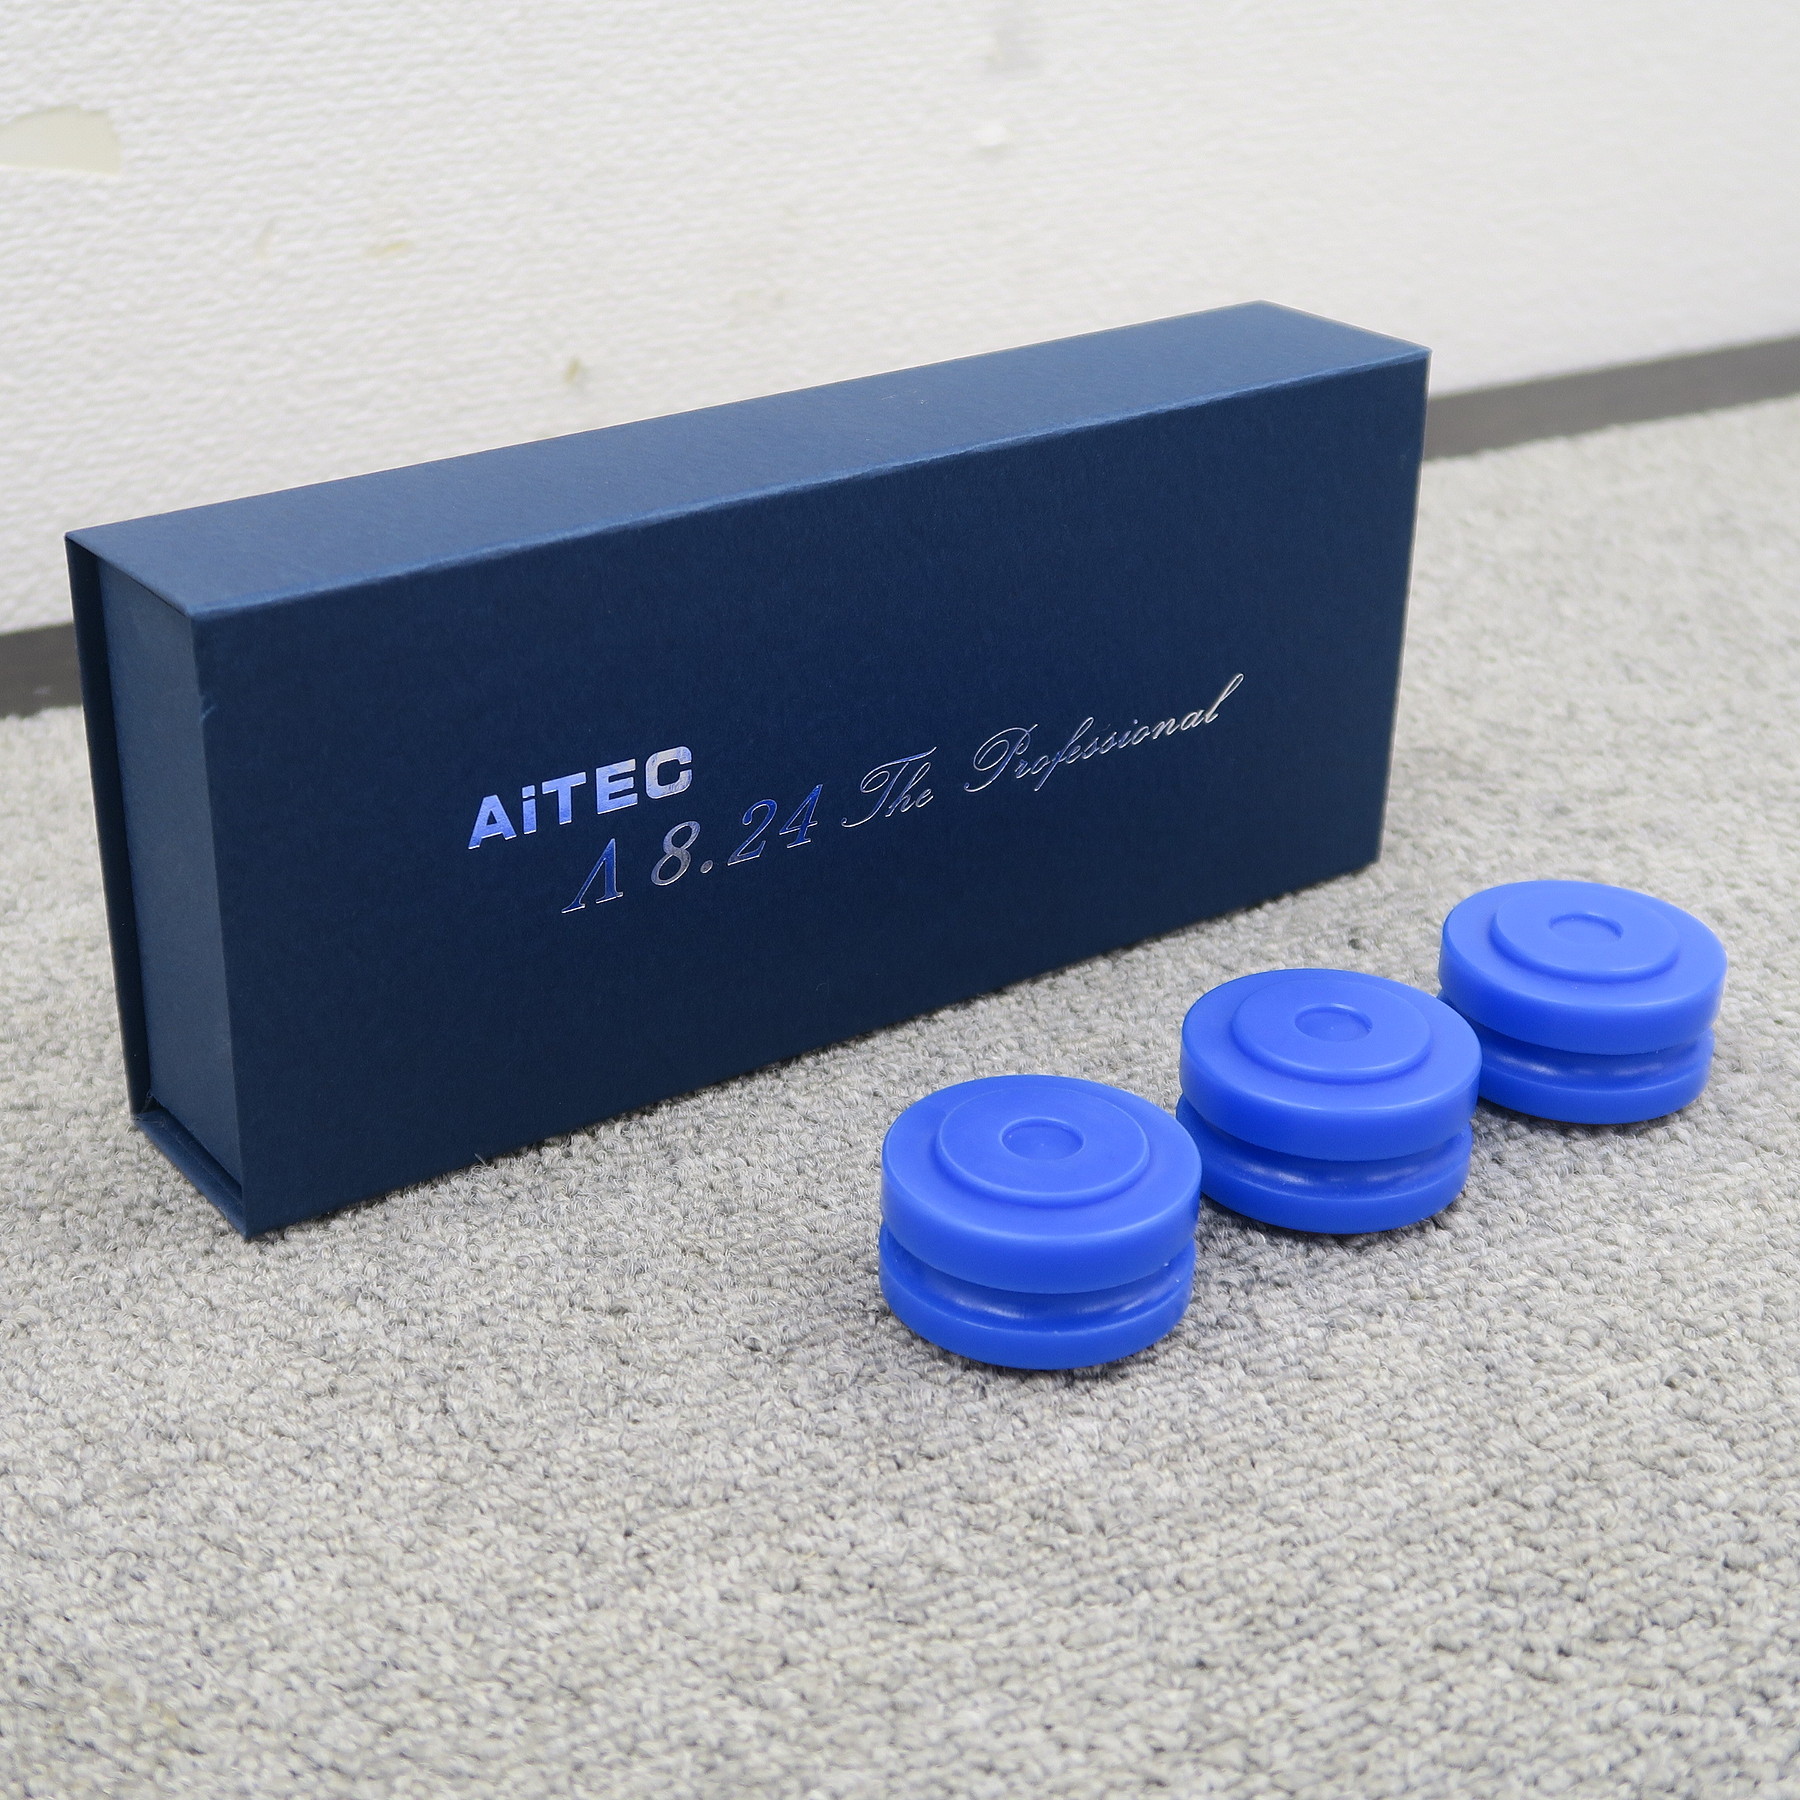 Aランク】アイテック AiTEC Λ8.24 The Professional インシュレーター